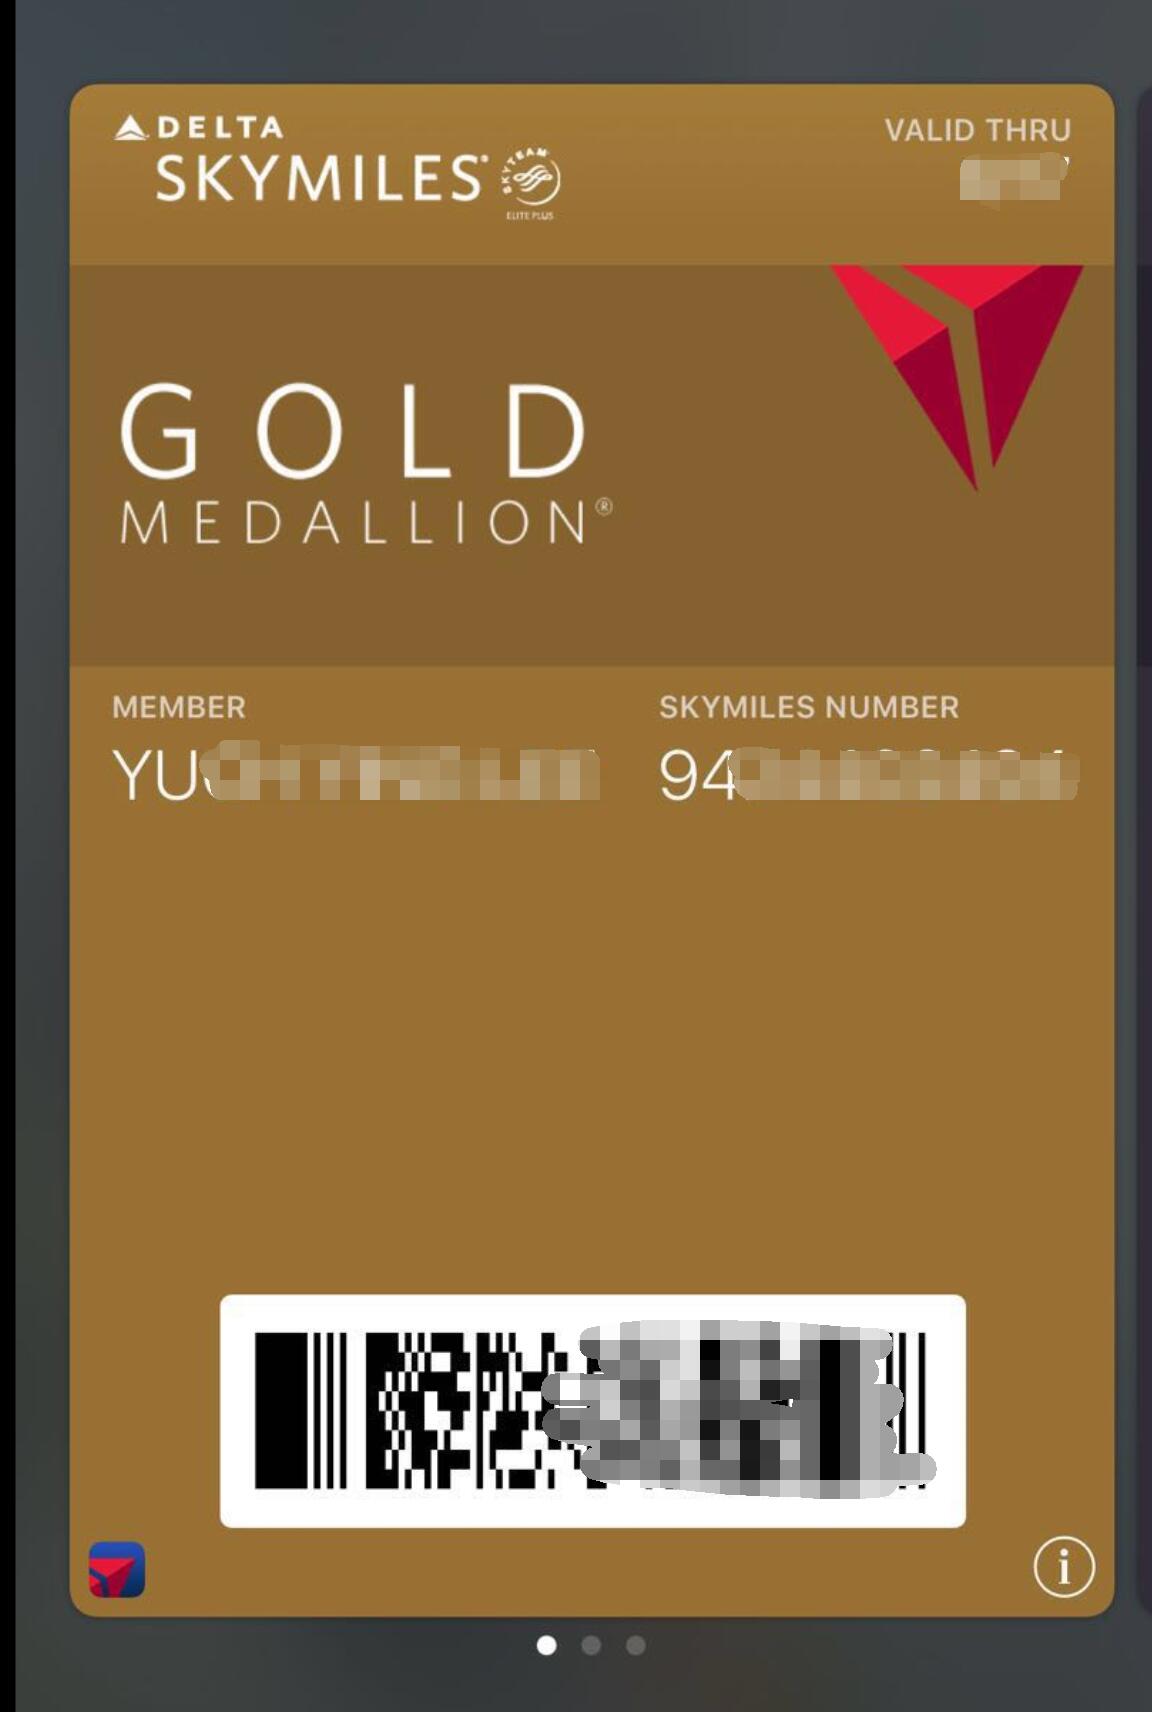 Delta Gold Medallion Status Upgrade | Skyteam Elite Plus